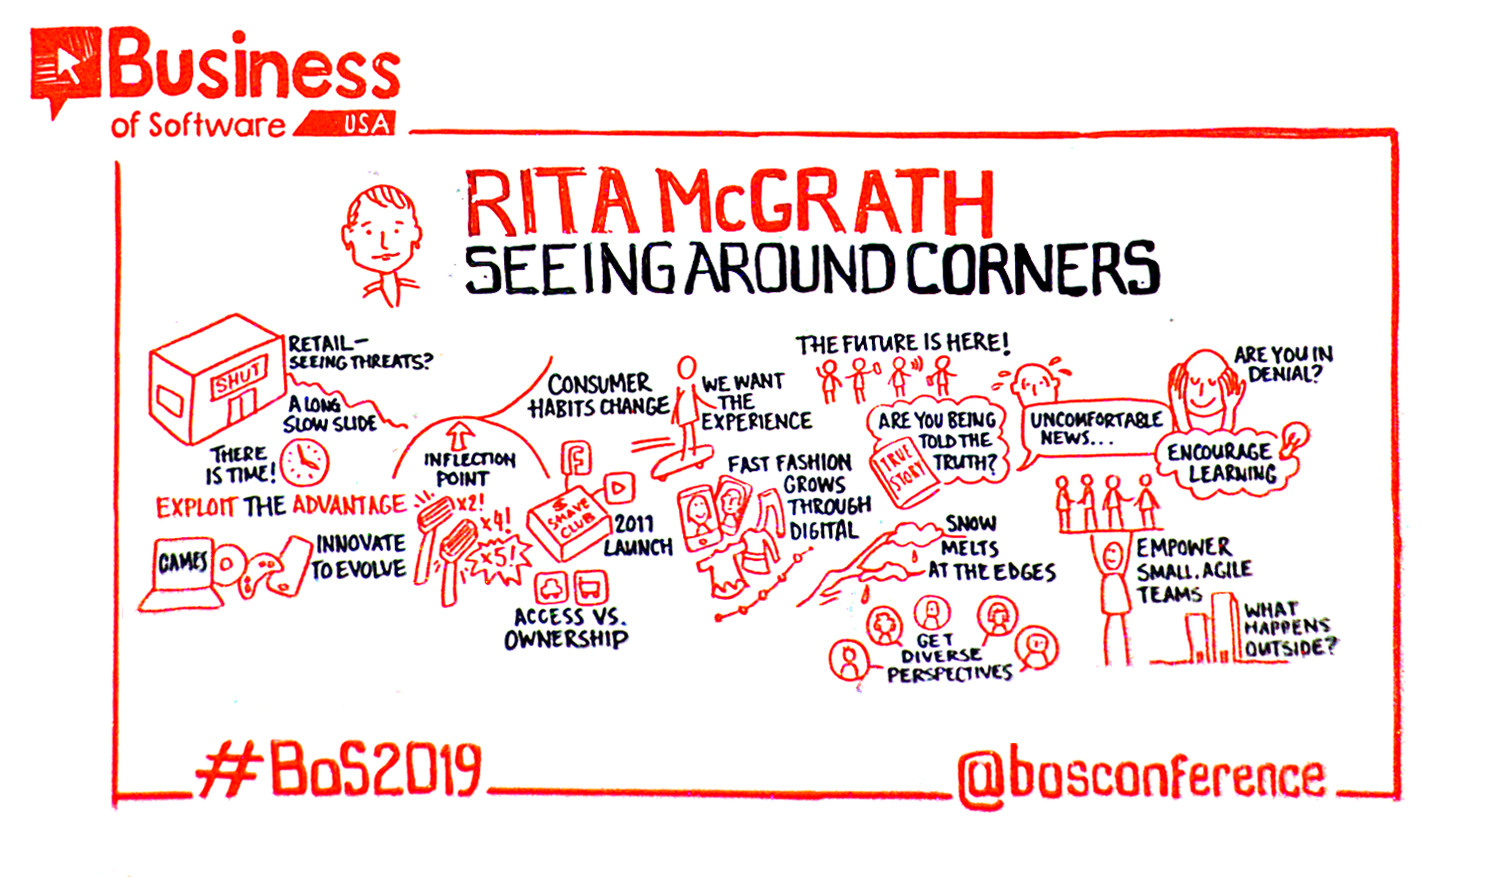 Rita McGrath sketchnote 2019 